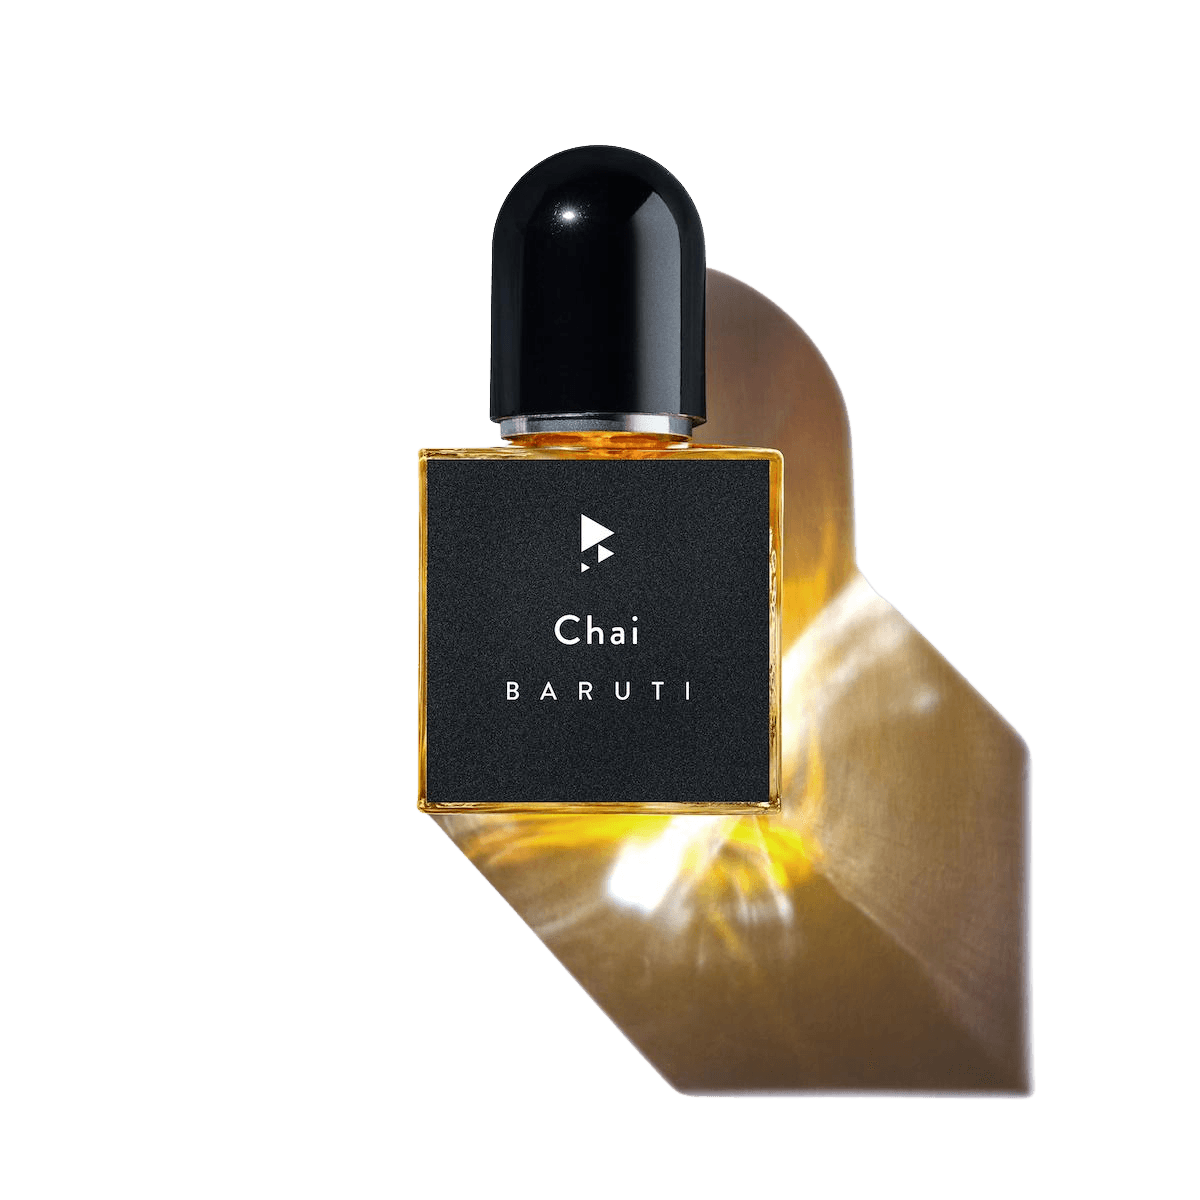 Image of the perfume Chai by the brand Baruti